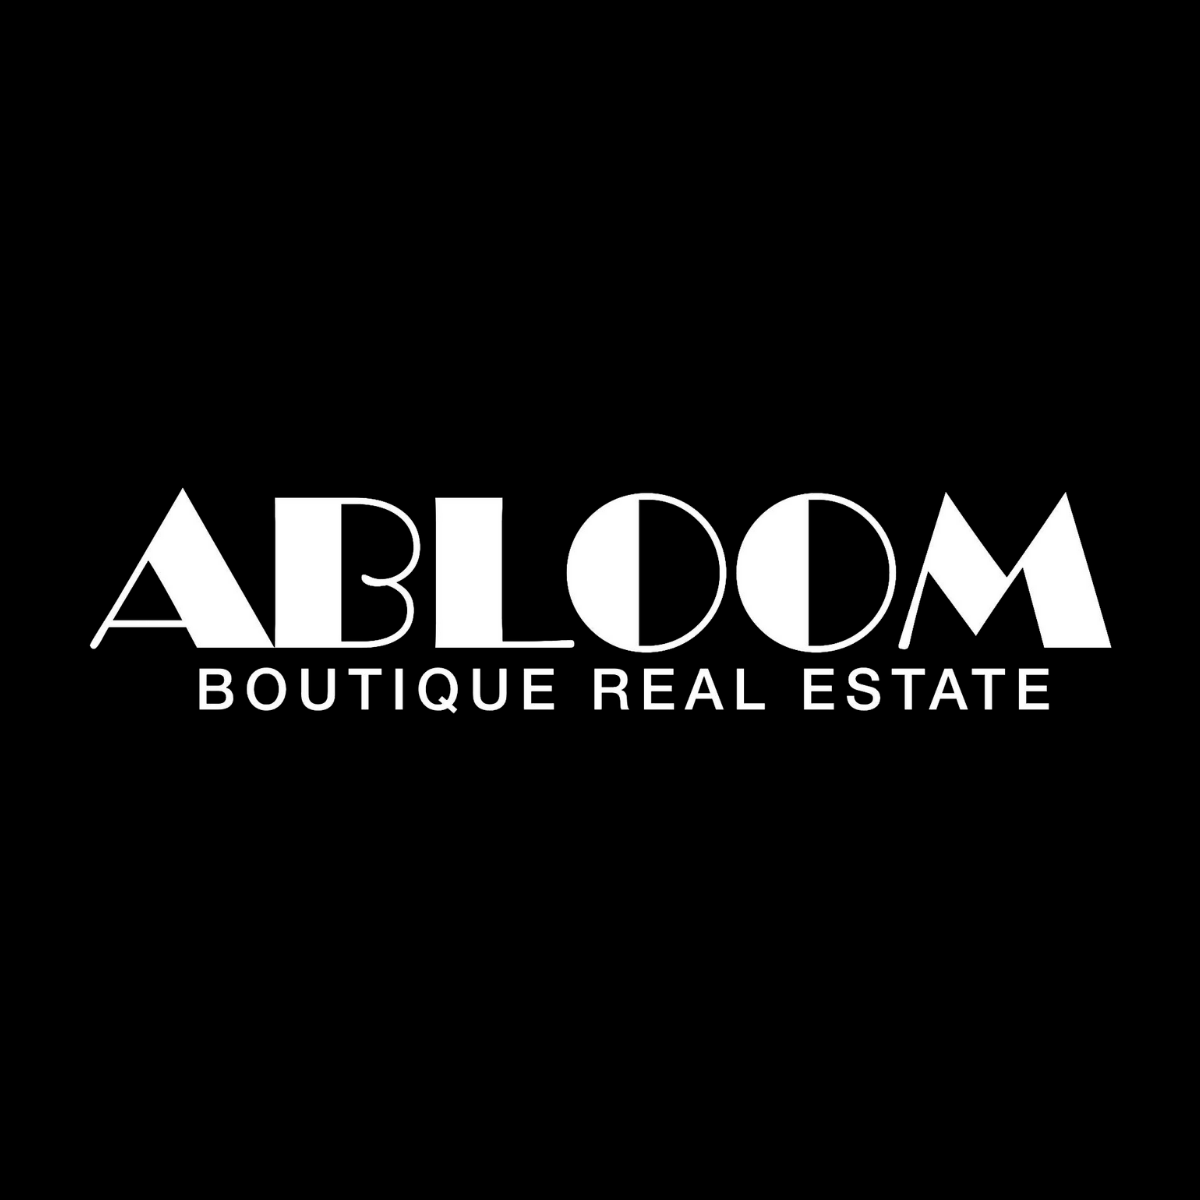 Abloom Boutique Real Estate 